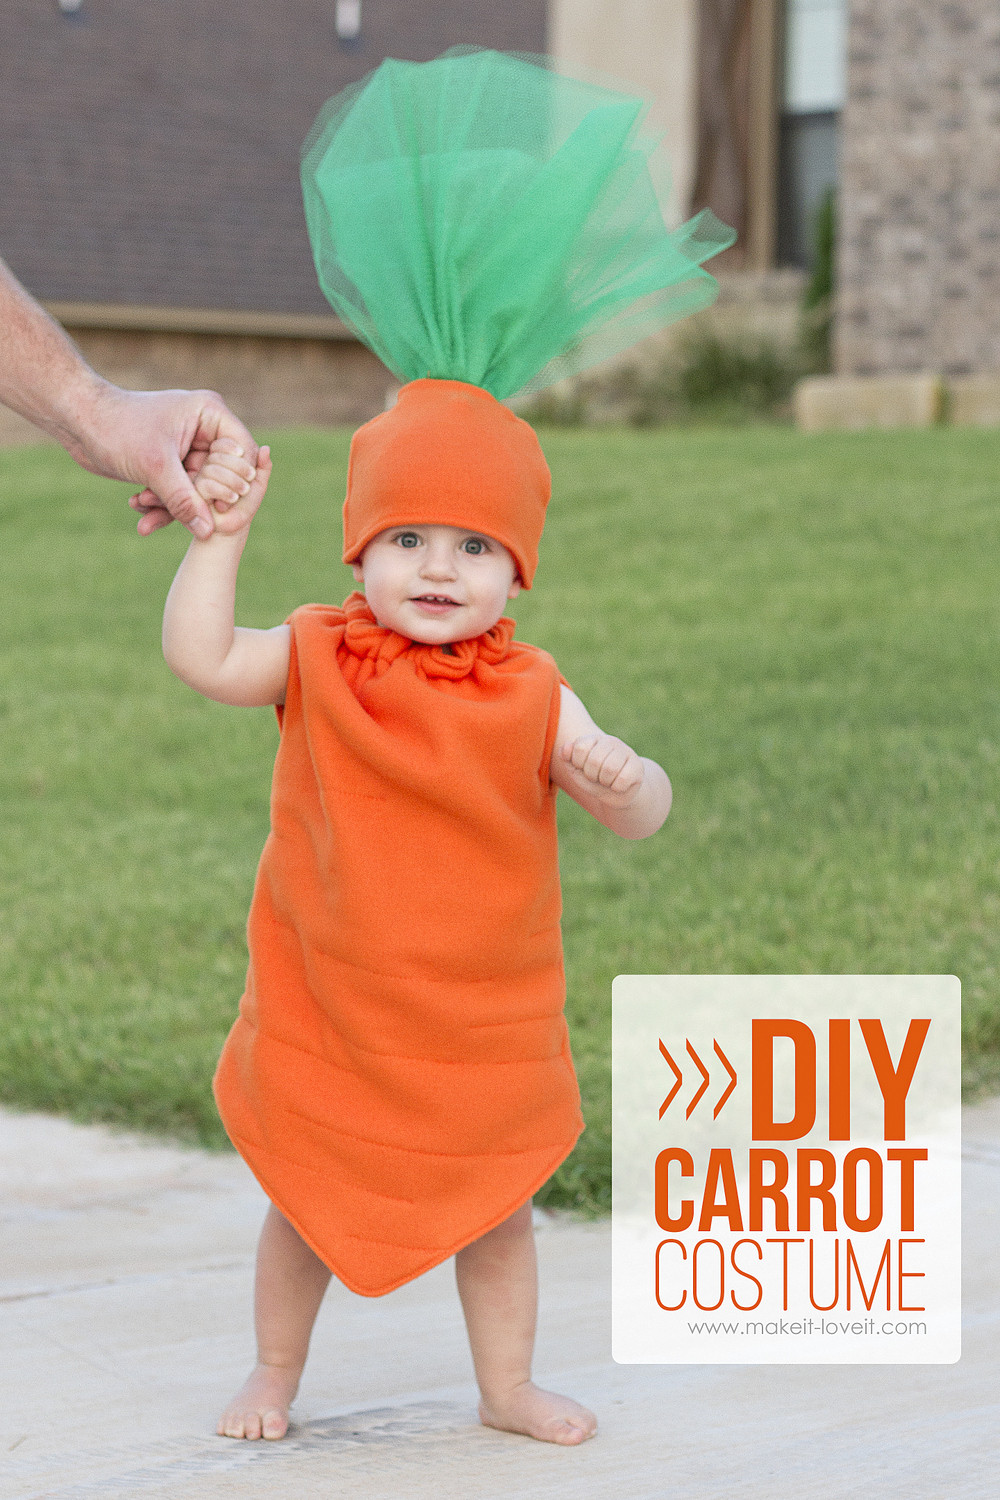 Carrot Costume DIY
 Last Minute "Little Bandit" Costume